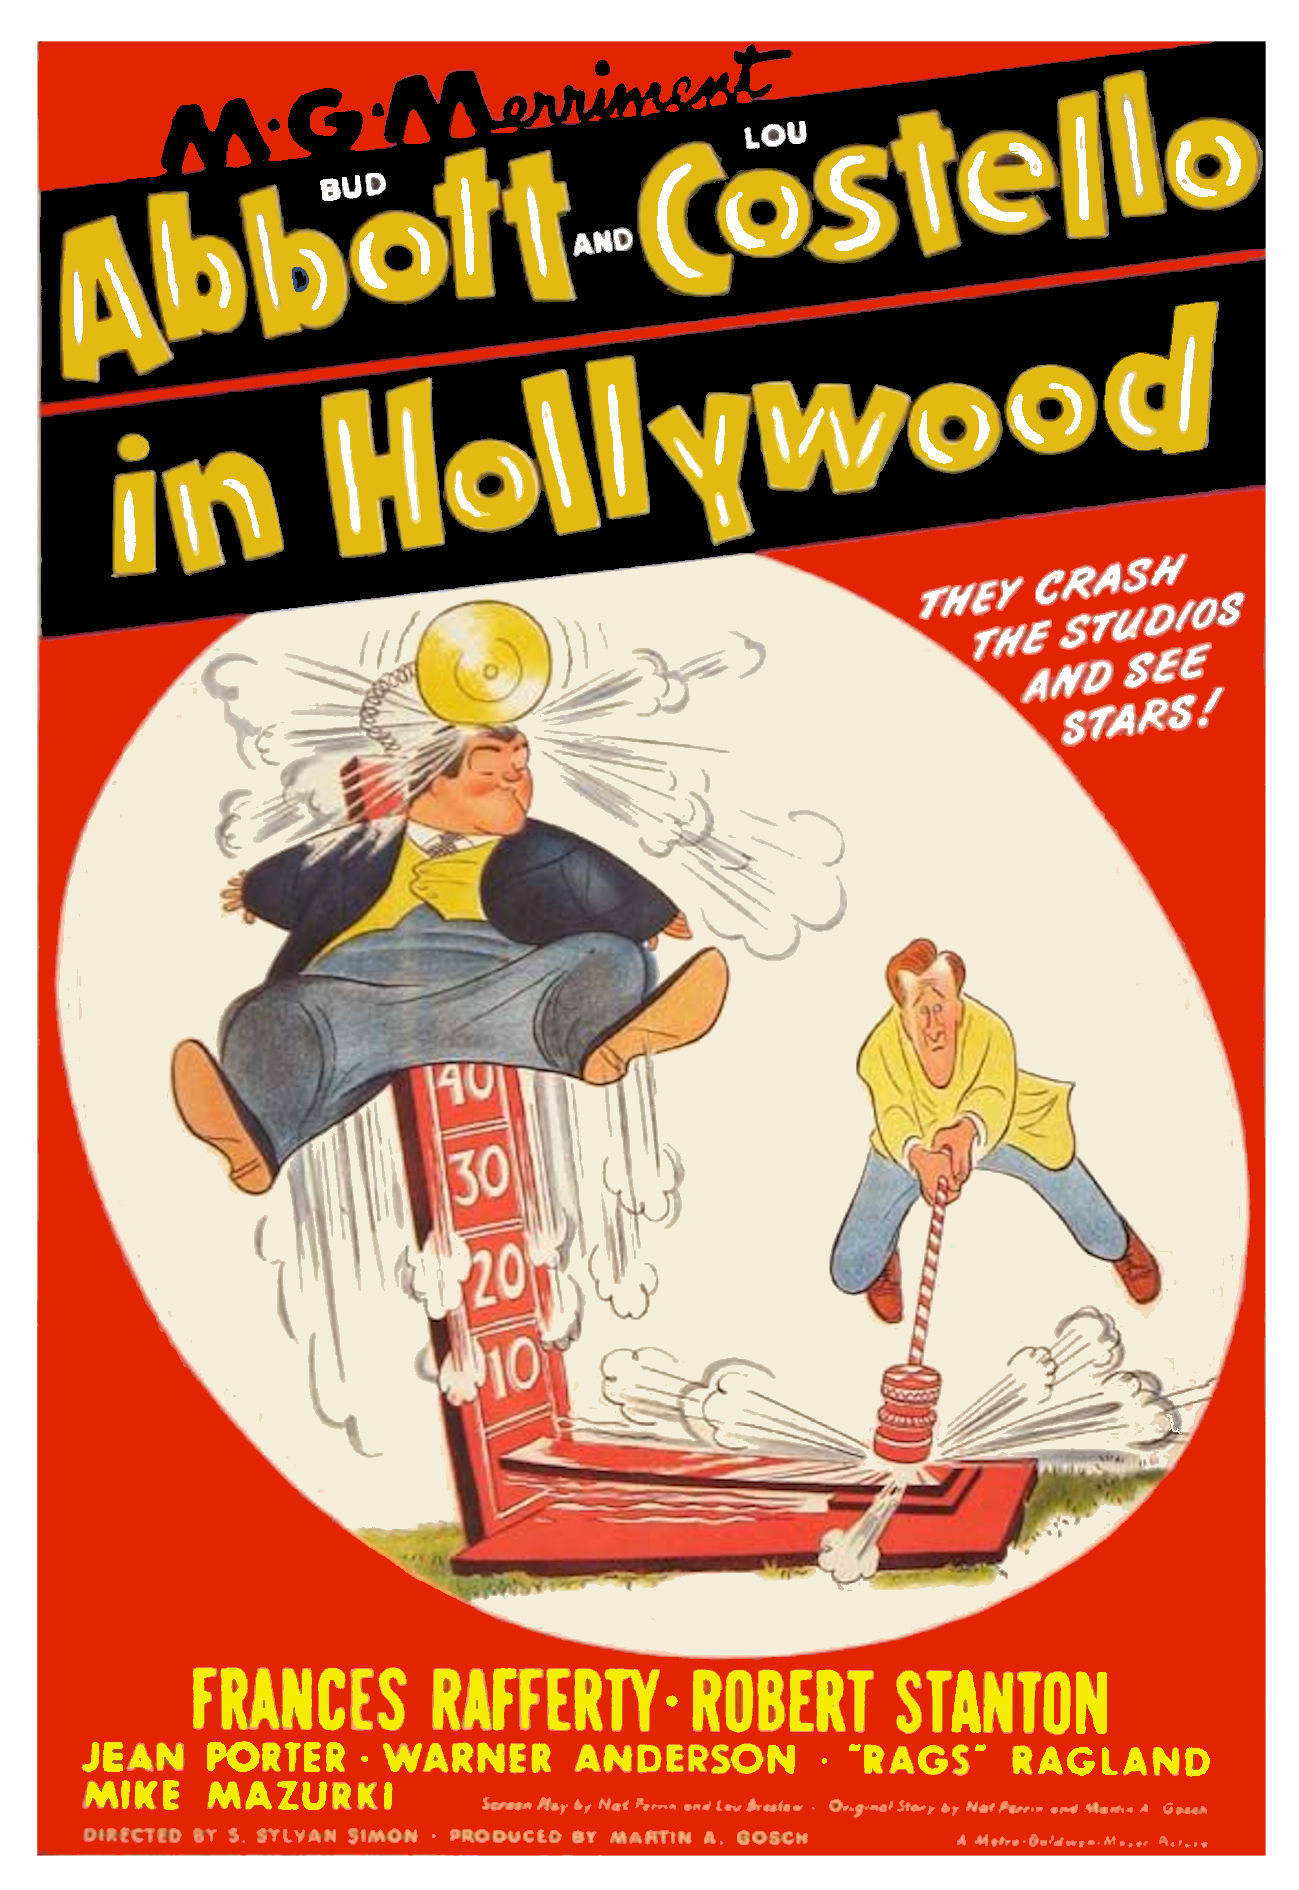 Nonton film Bud Abbott and Lou Costello in Hollywood layarkaca21 indoxx1 ganool online streaming terbaru